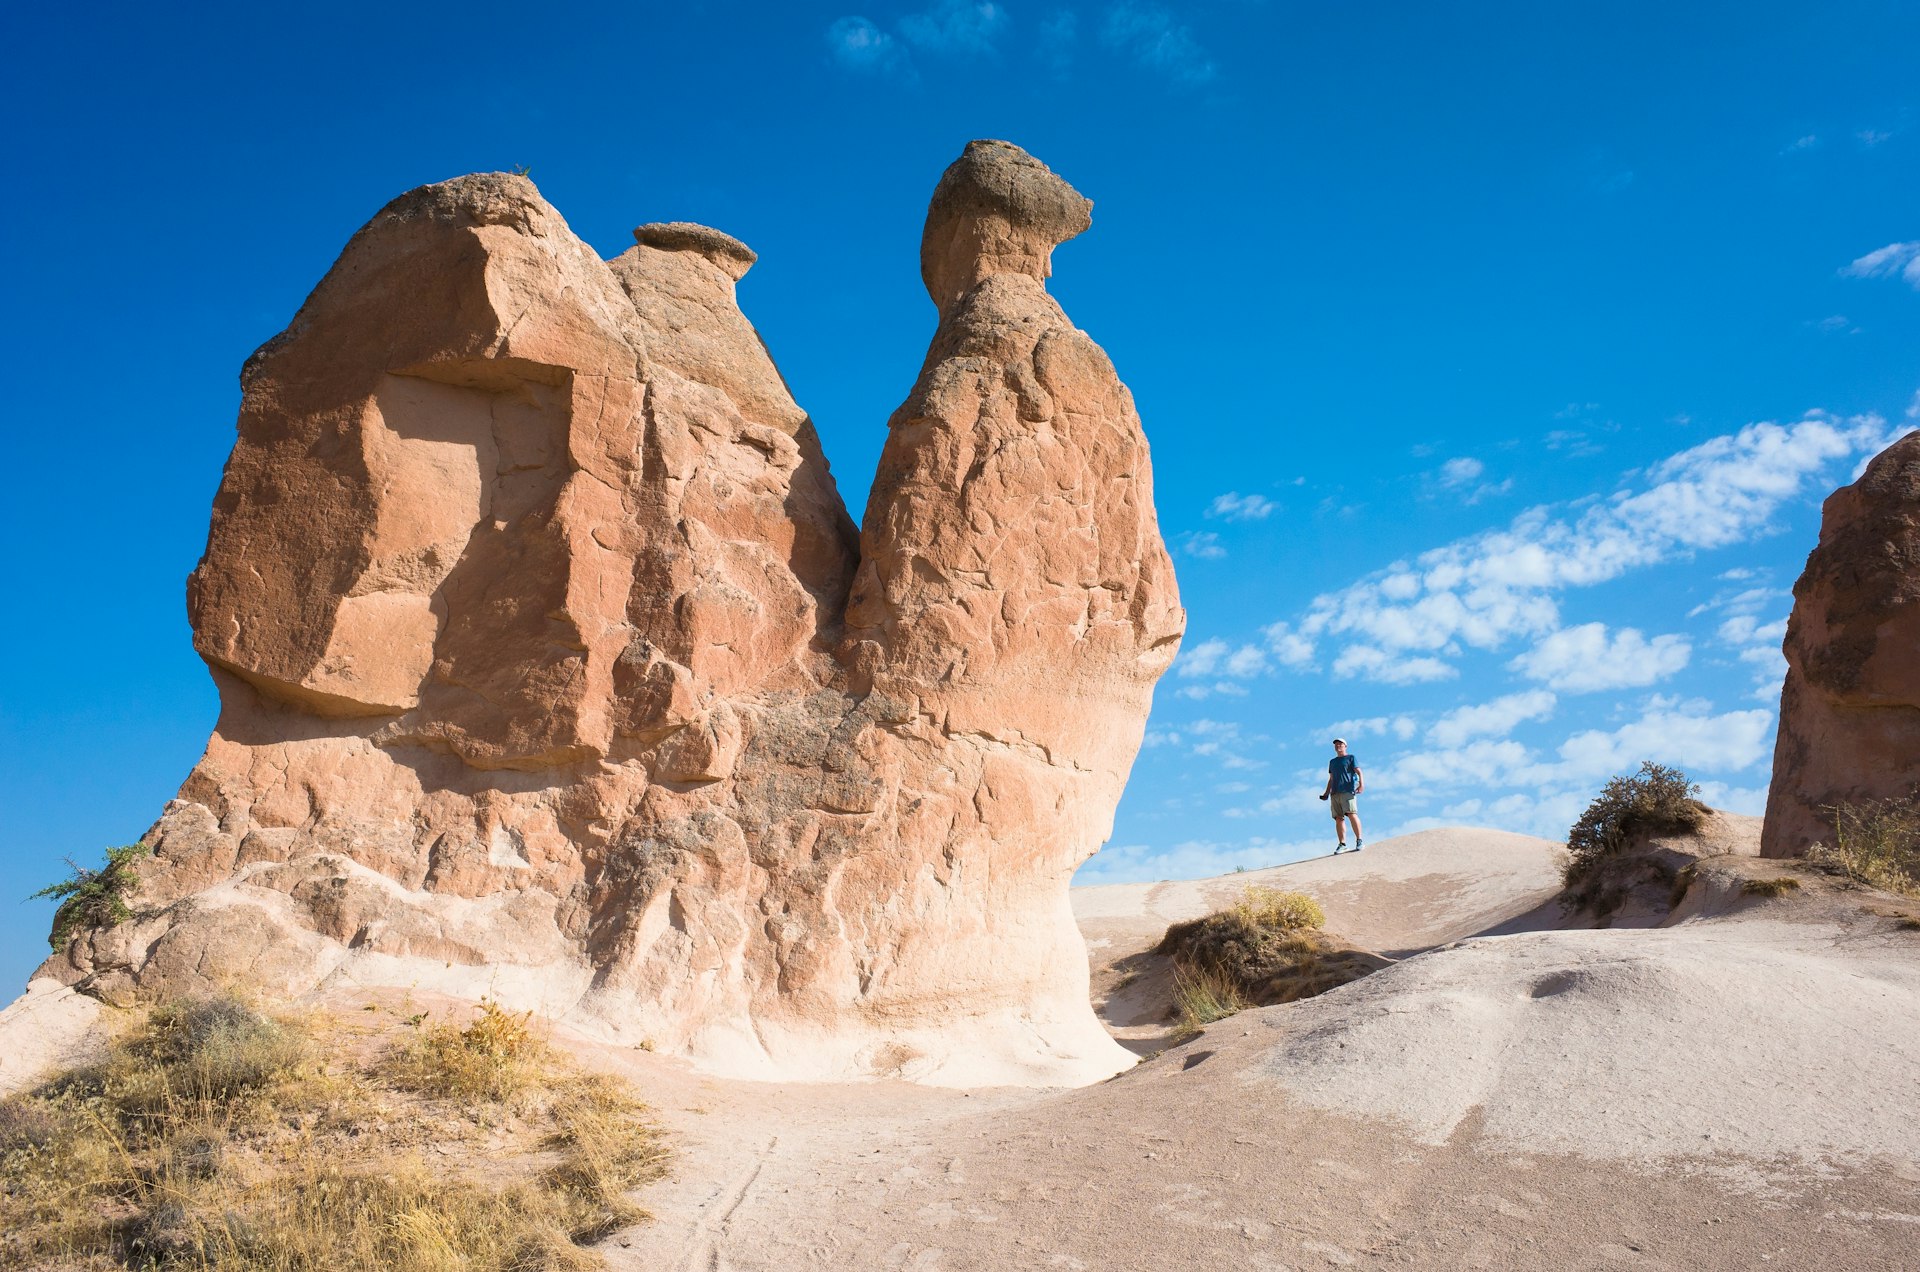 A sole tourist stands near a huge rock formation shaped like a camel